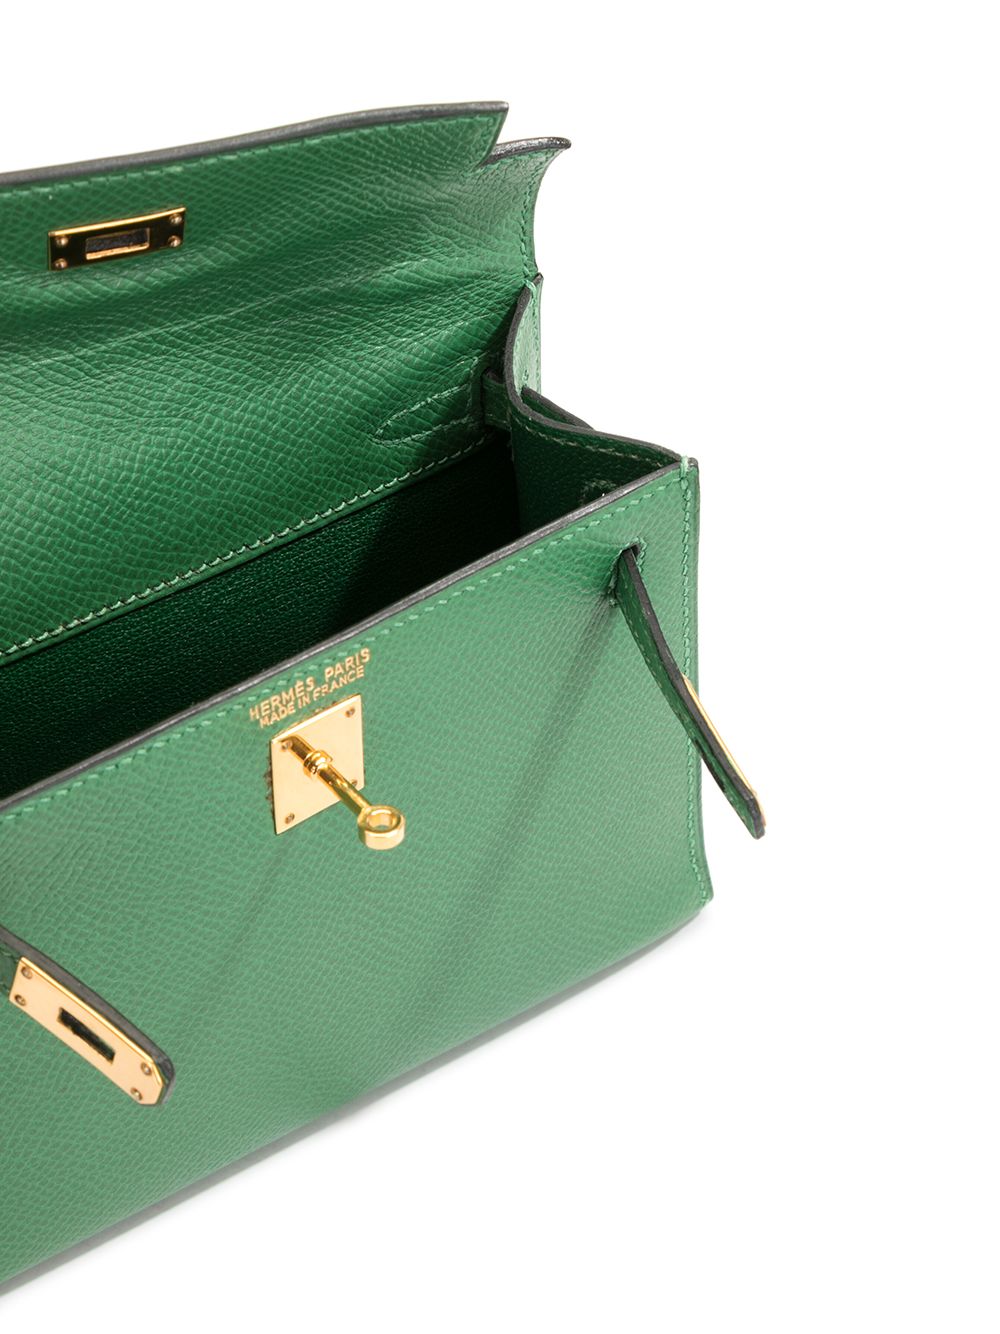 Hermès Pre-Owned Mini Kelly Shoulder Bag in Green